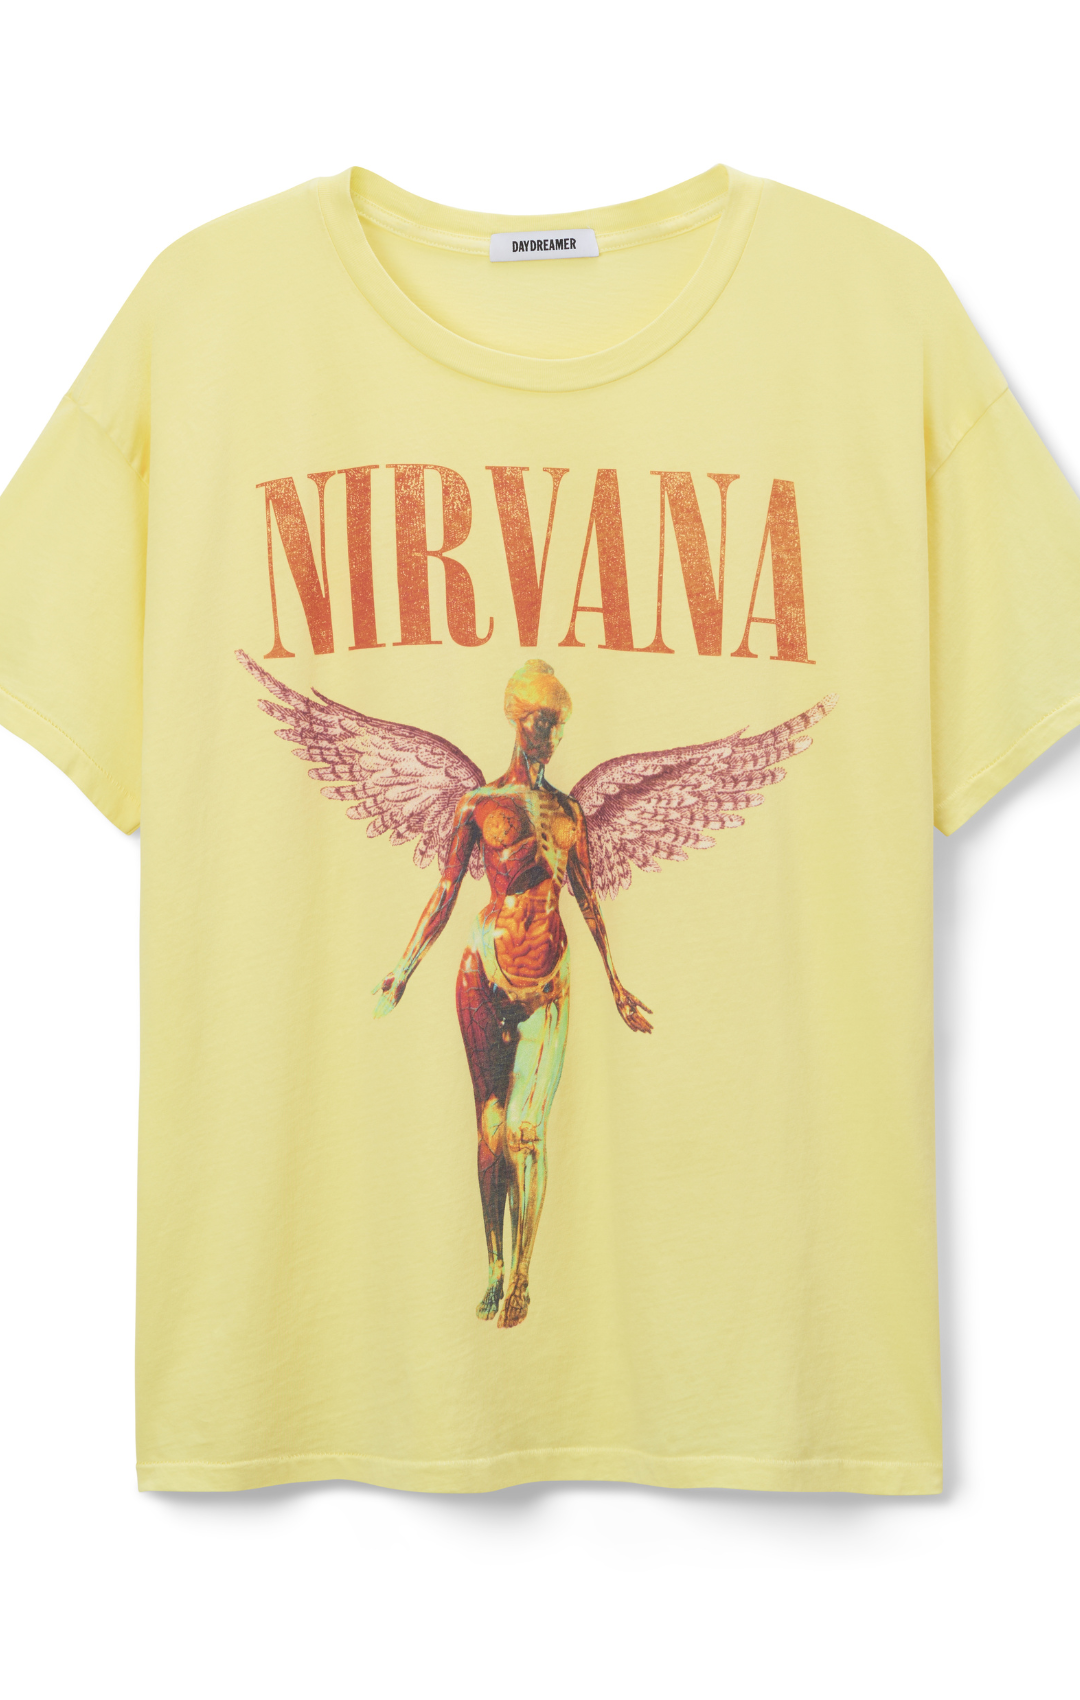 Nirvana In Utero Merch Tee by Daydreamer